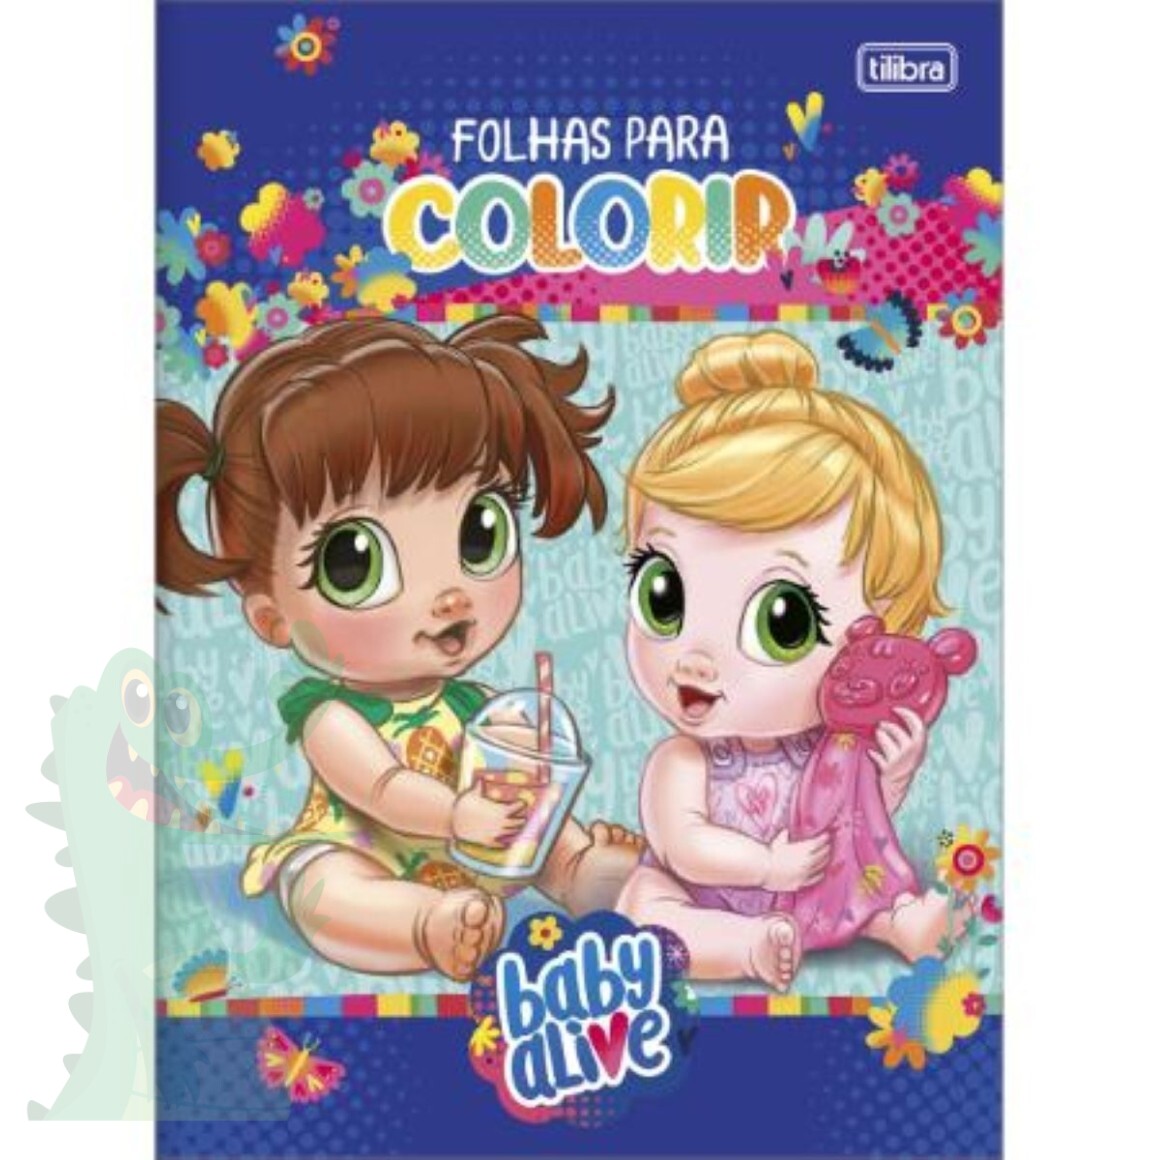 Páginas para colorir divertidas e educativas de bonecas LOL para